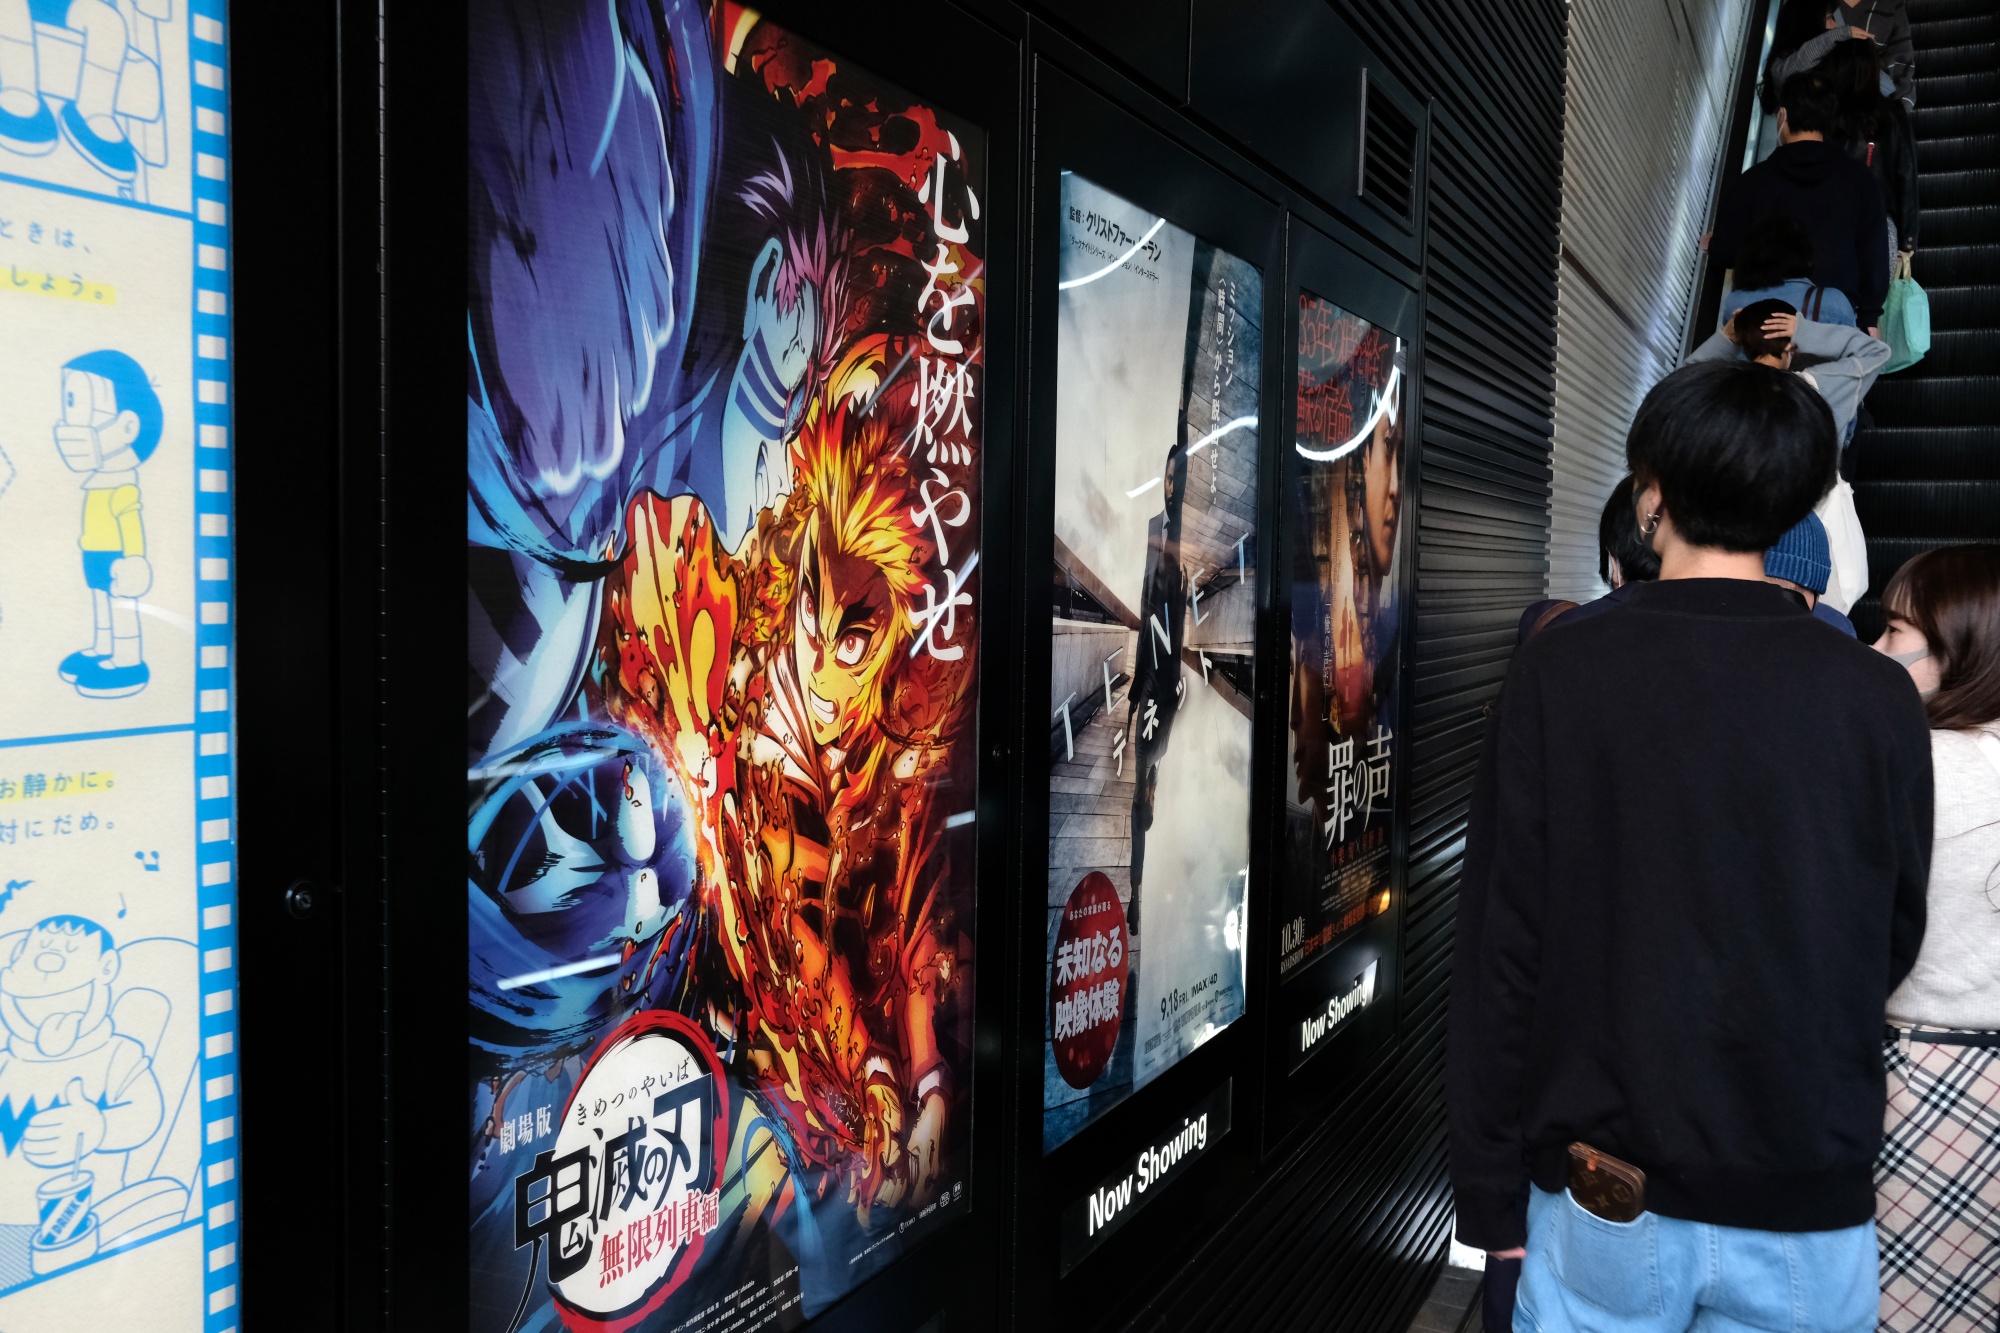 Demon Slayer: Mugen Train tops U.S. box office in second round